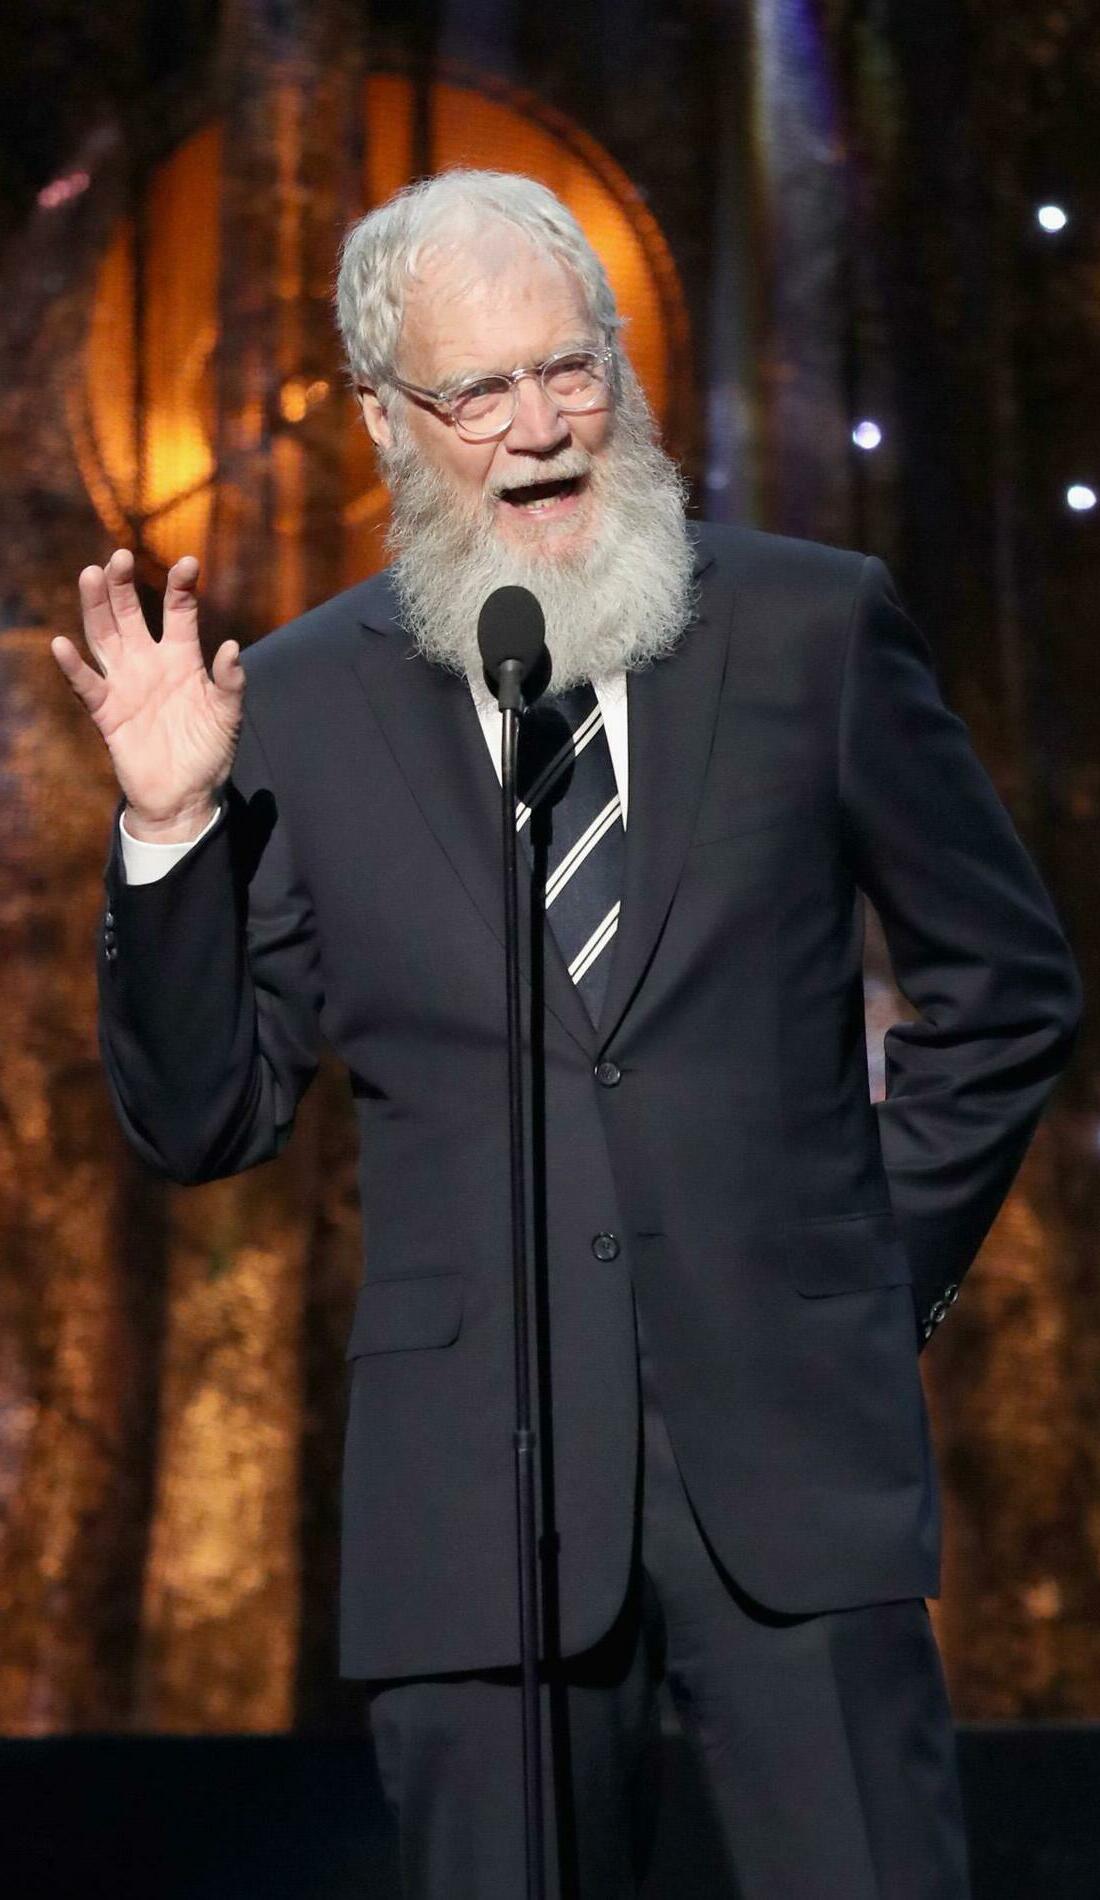 A David Letterman live event